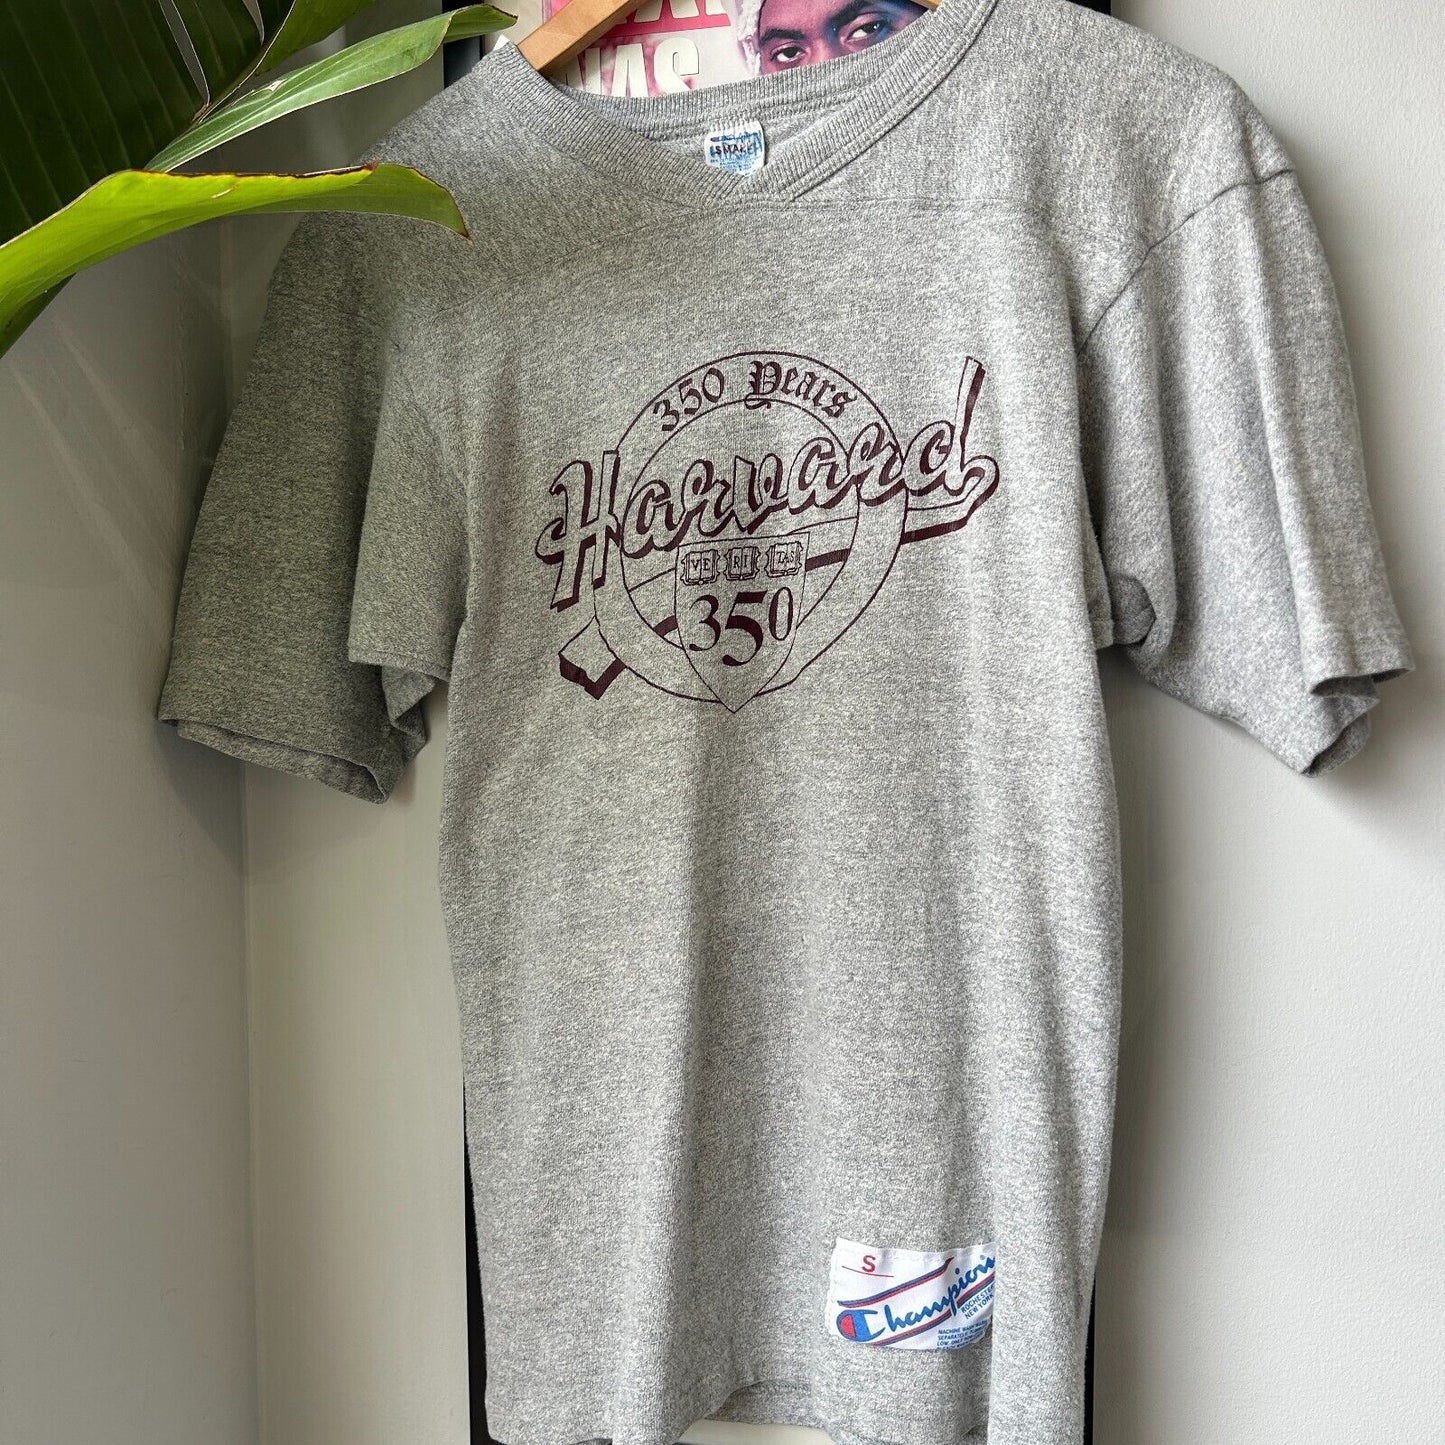 VINTAGE | HARVARD University Champion Grey T-Shirt sz S Adult